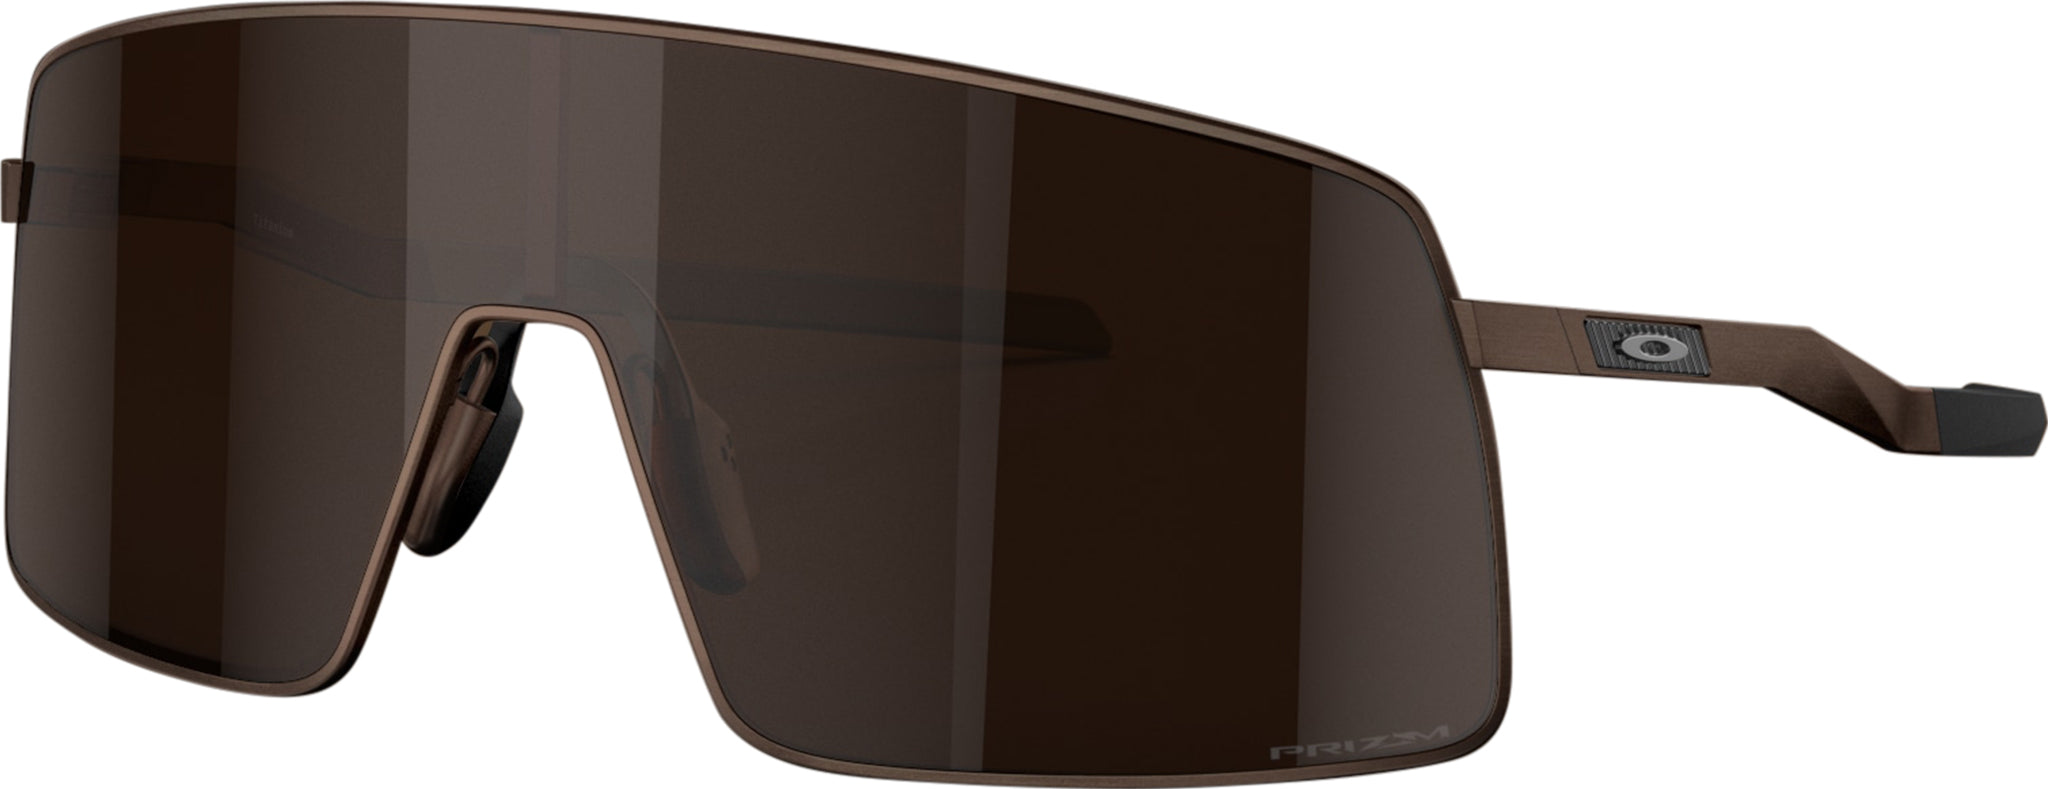 Oakley Sutro Ti Sunglasses - Satin Toast - Prizm Tungsten Iridium Lens